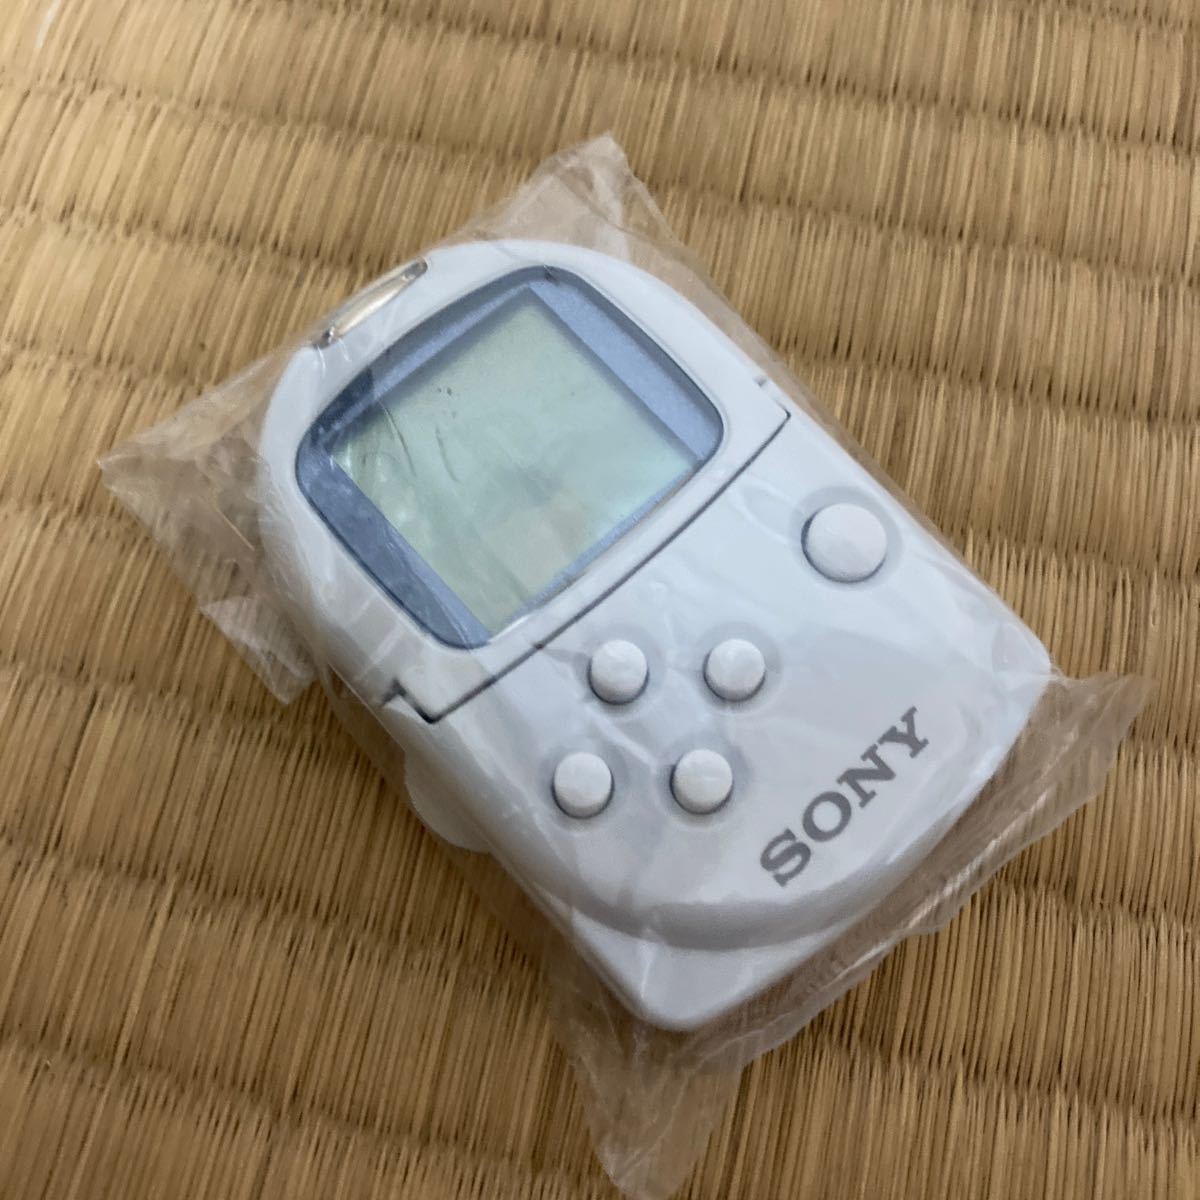 SONY PocketStation white unopened unused 